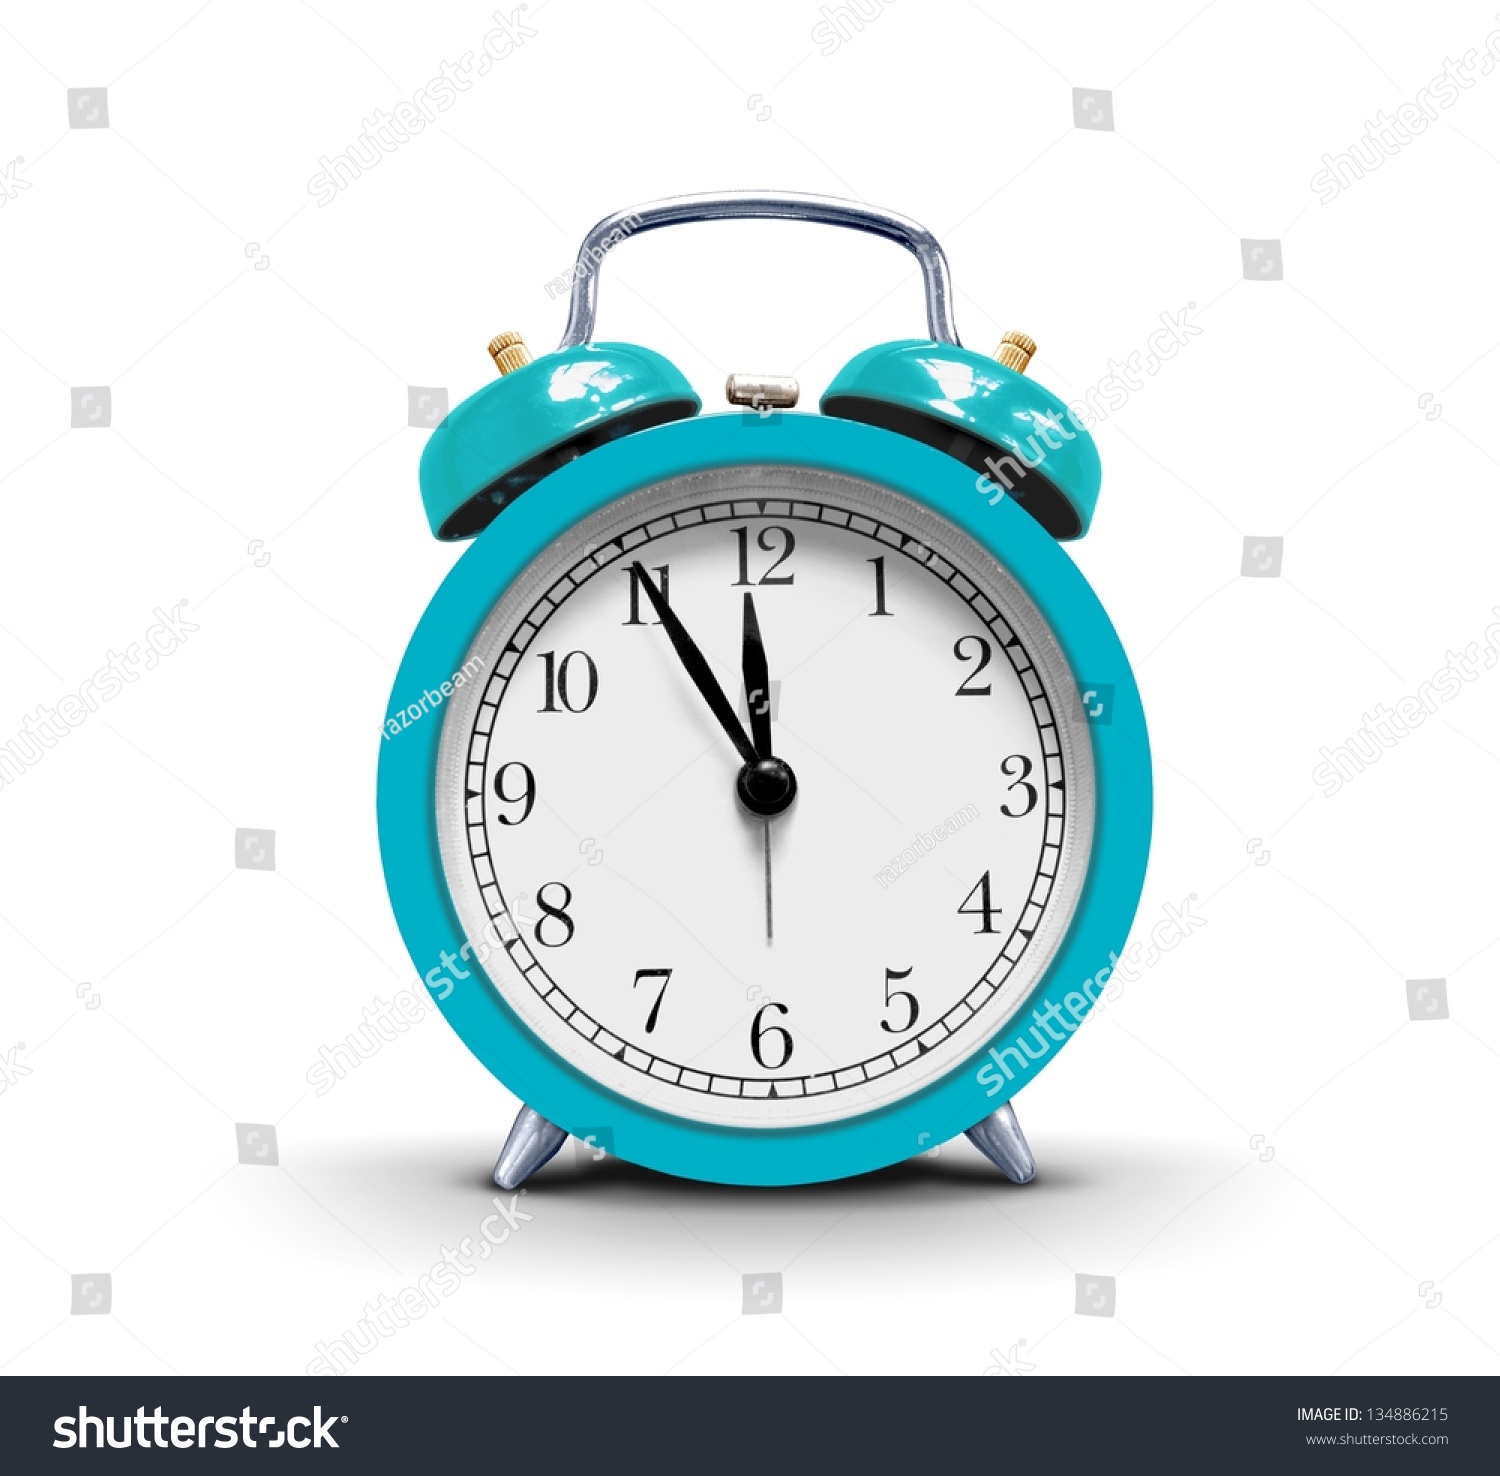 Alarm clock over white #134886215